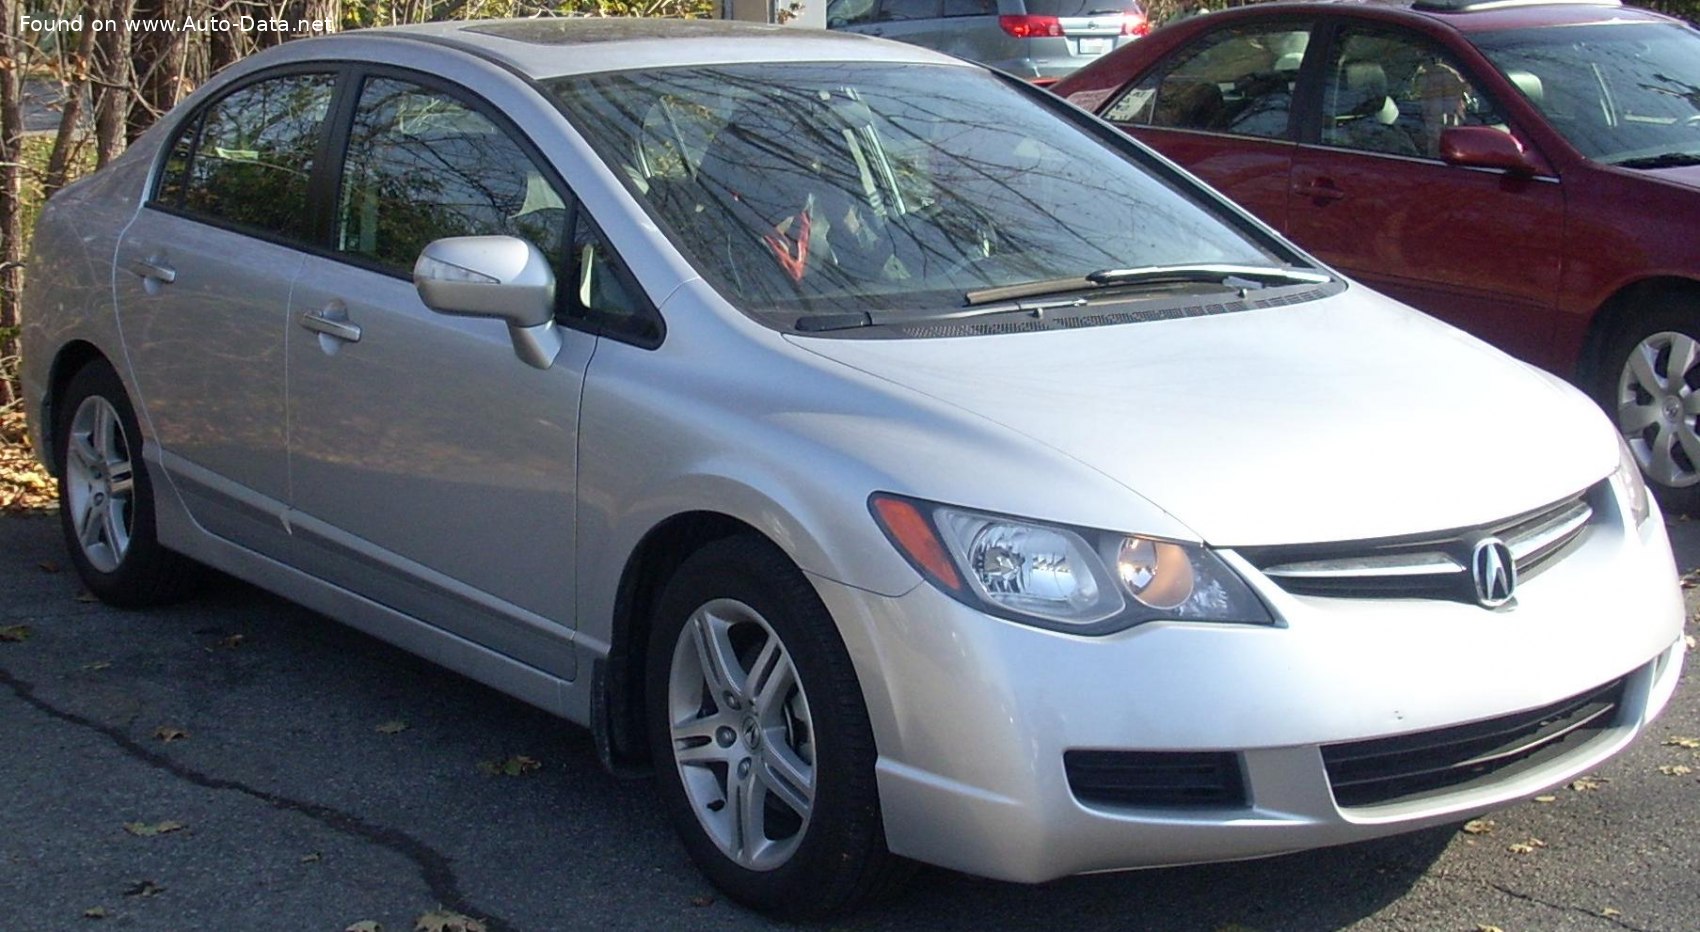 Acura CSX (2005)